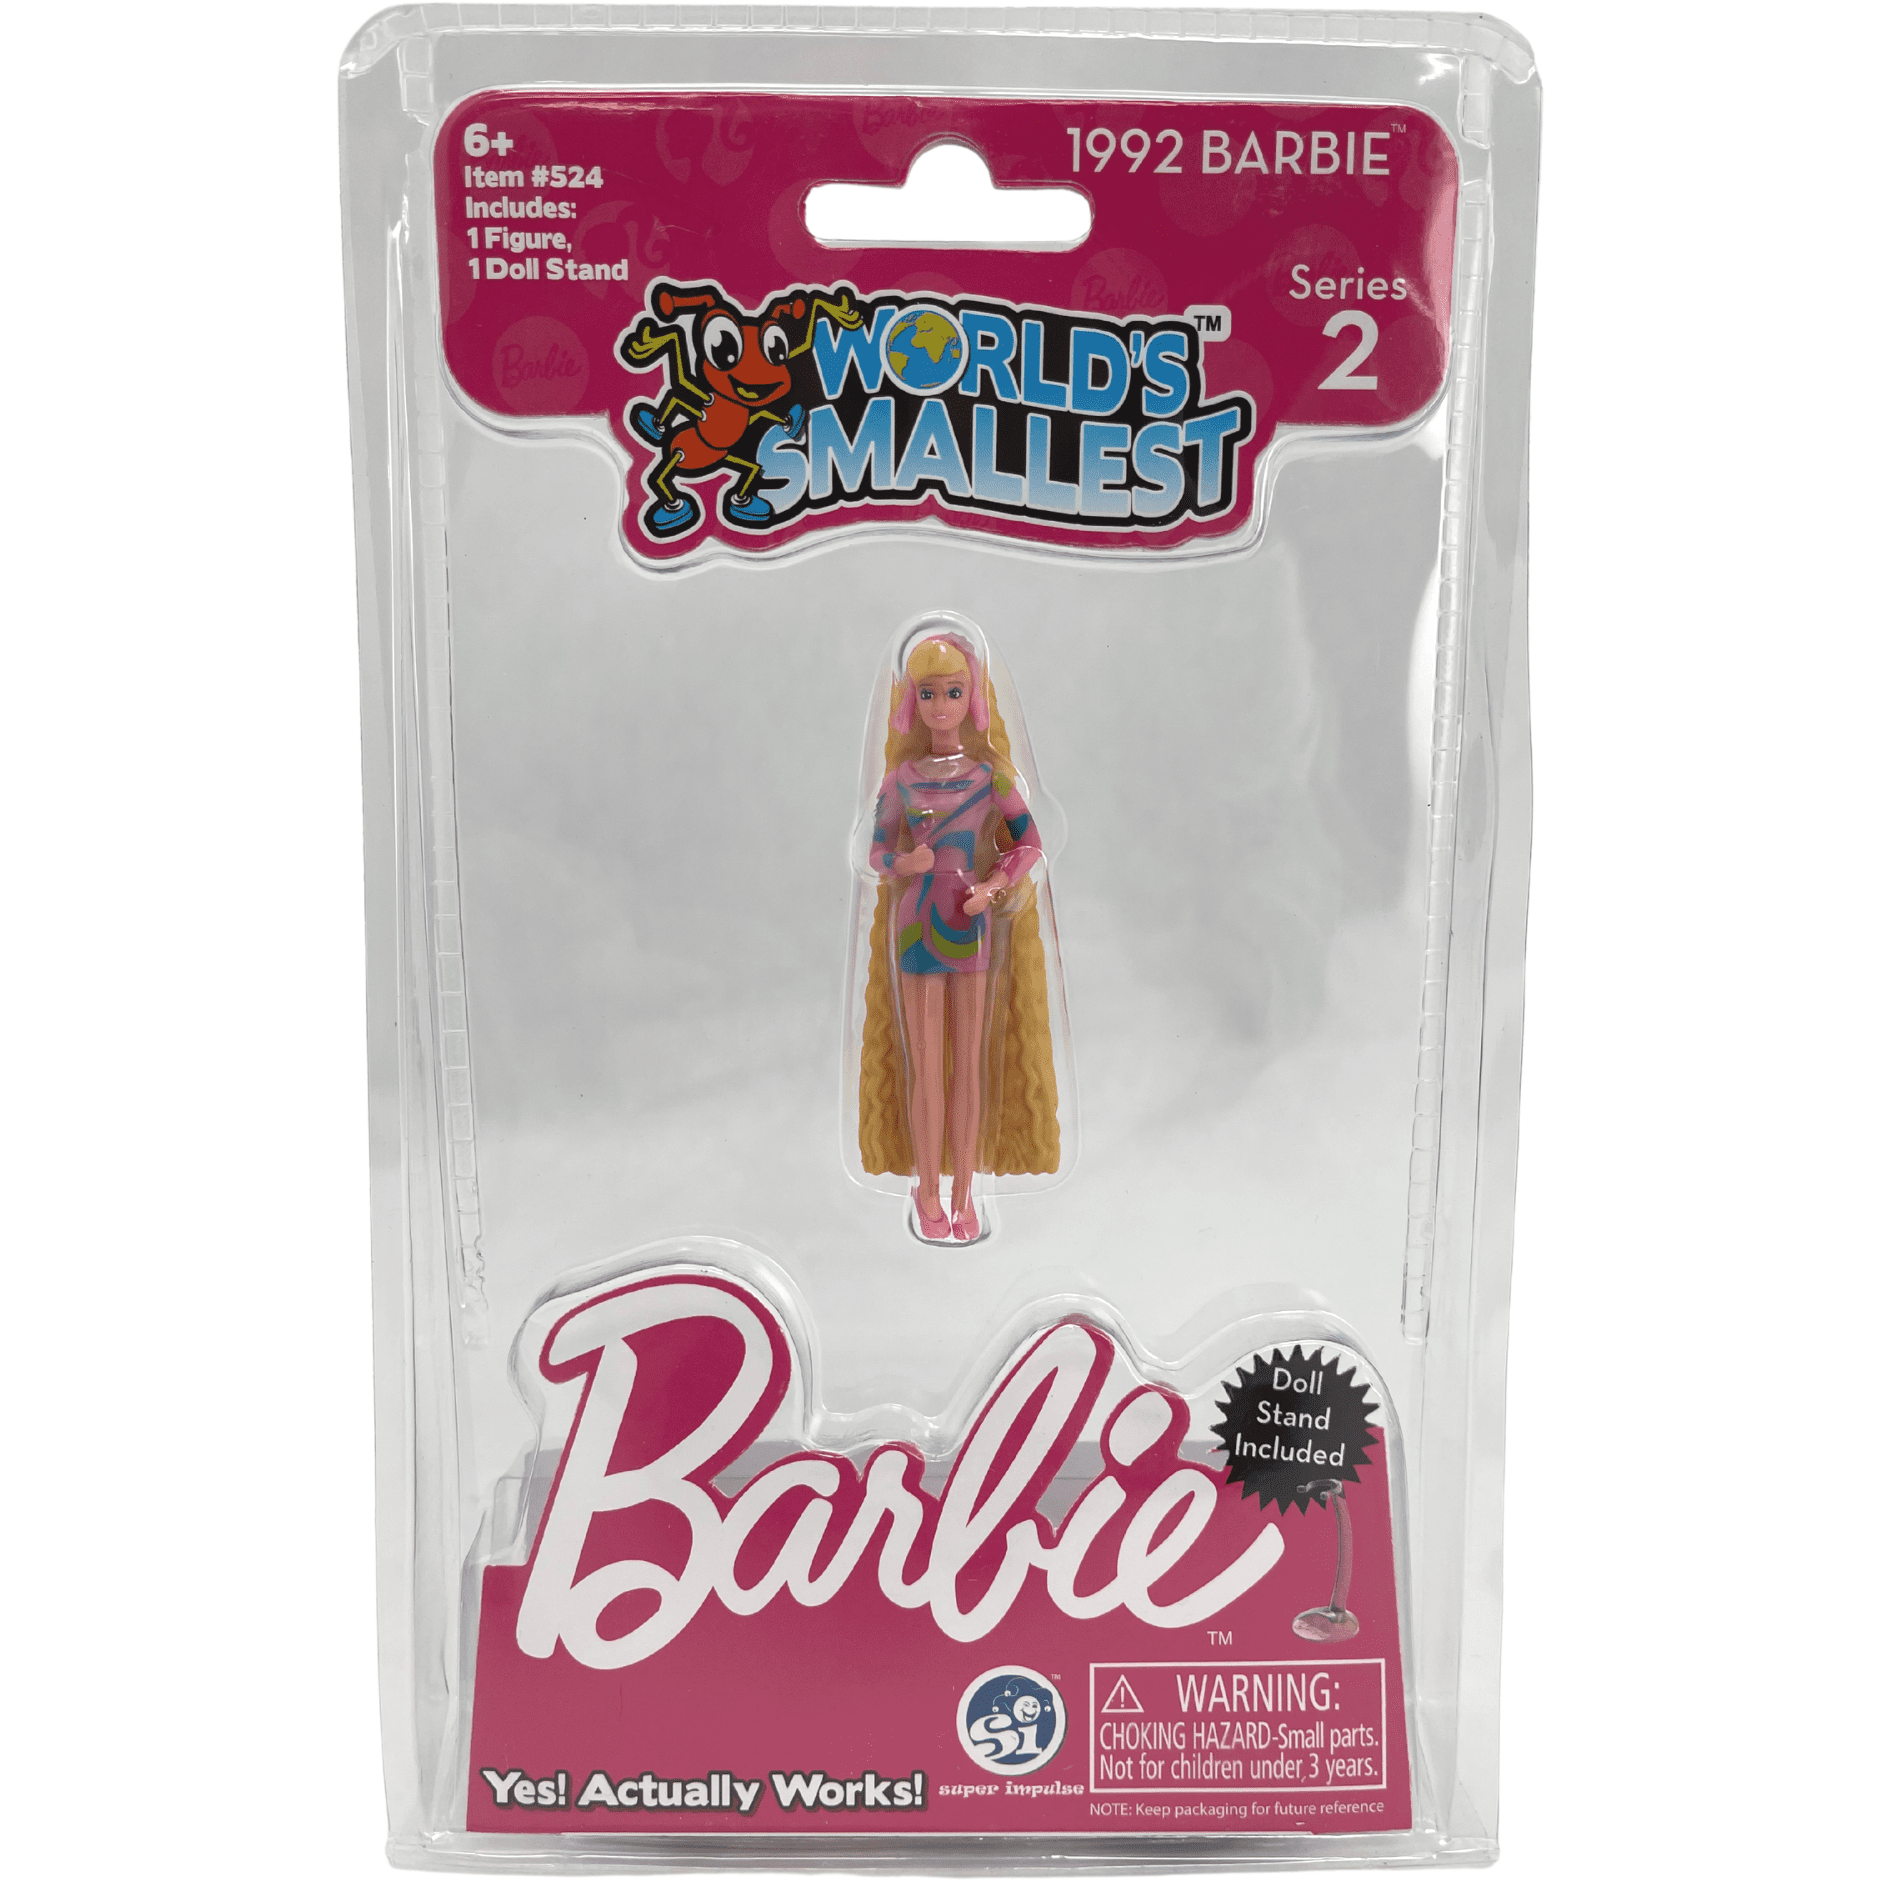 Mattel World's Smallest Barbie Doll / 1992 Barbie / Series 2 / Travel Size Toy